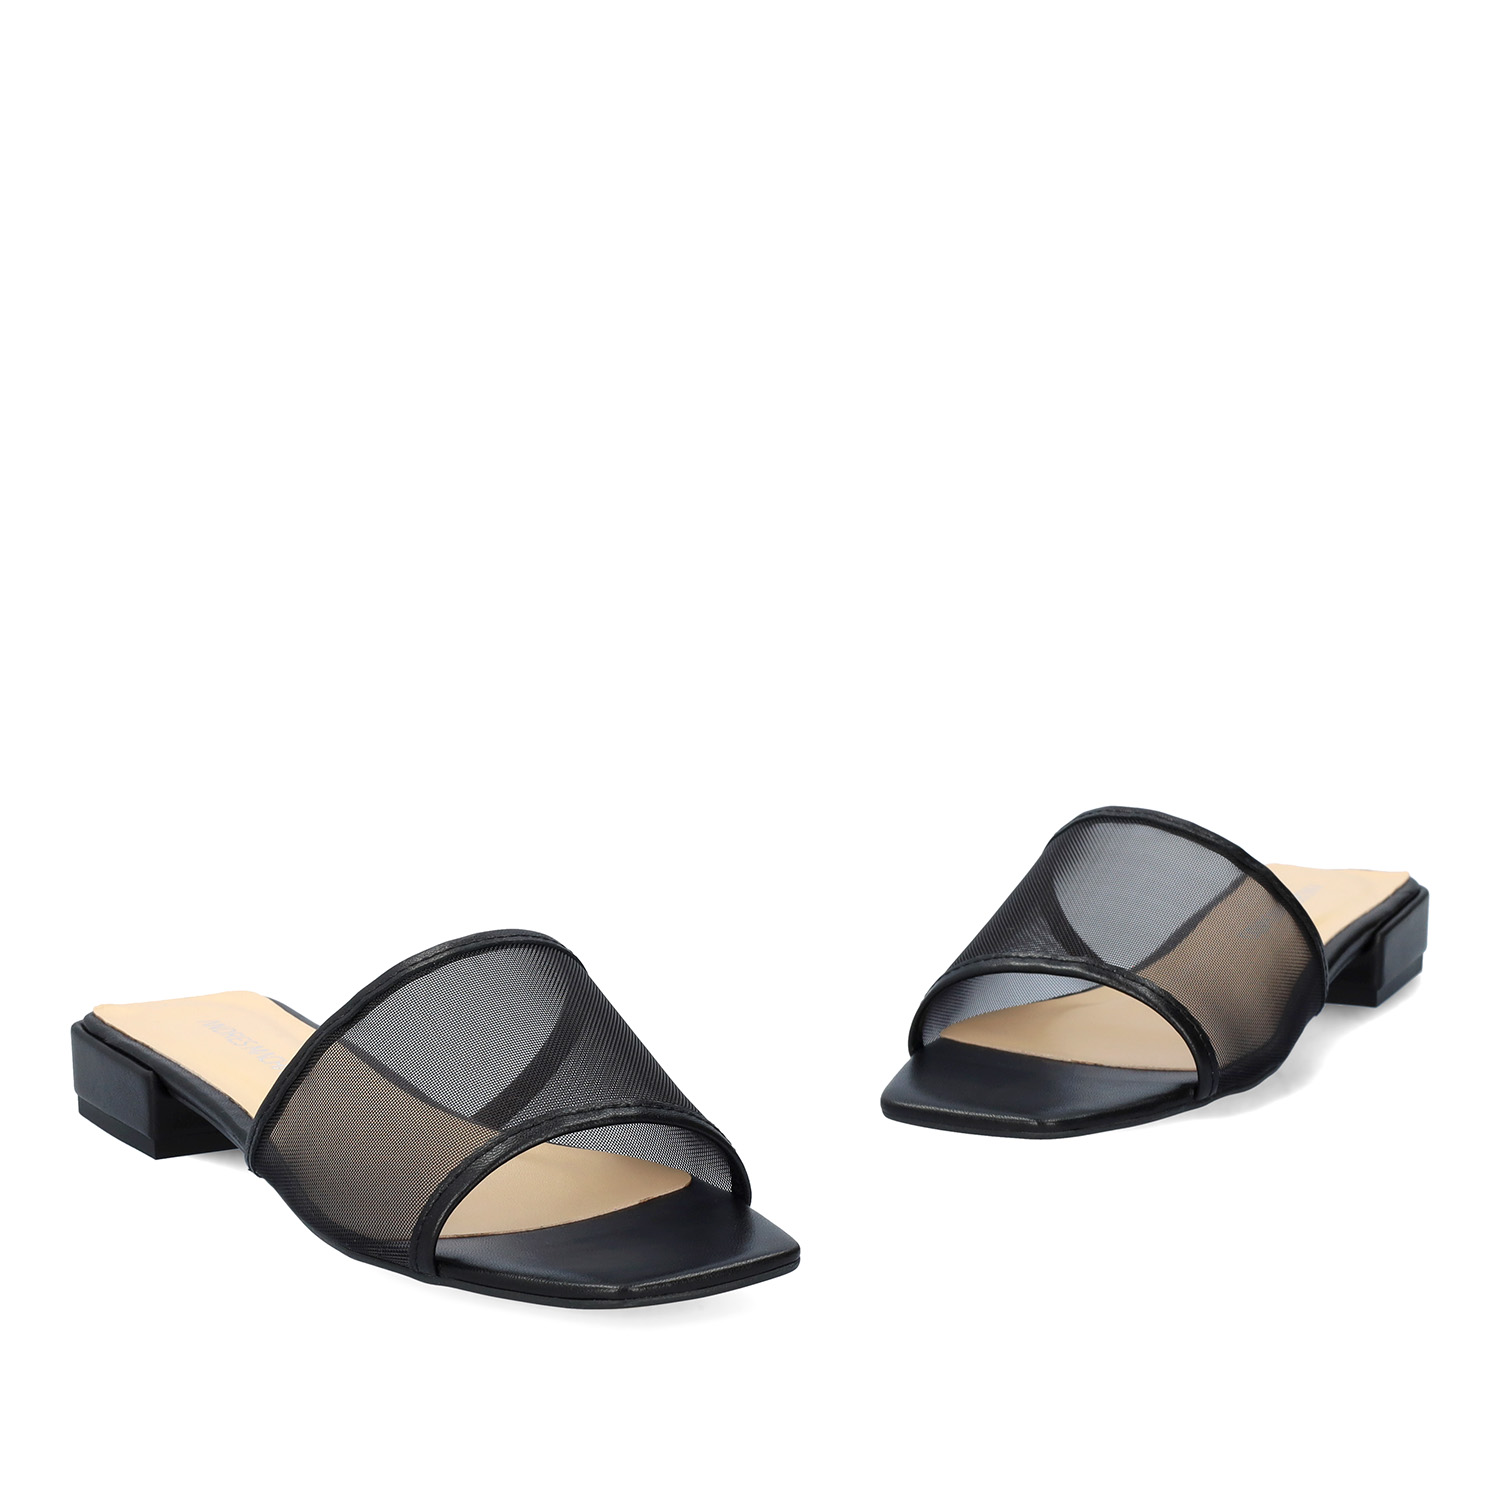 Black leather flat sandals 